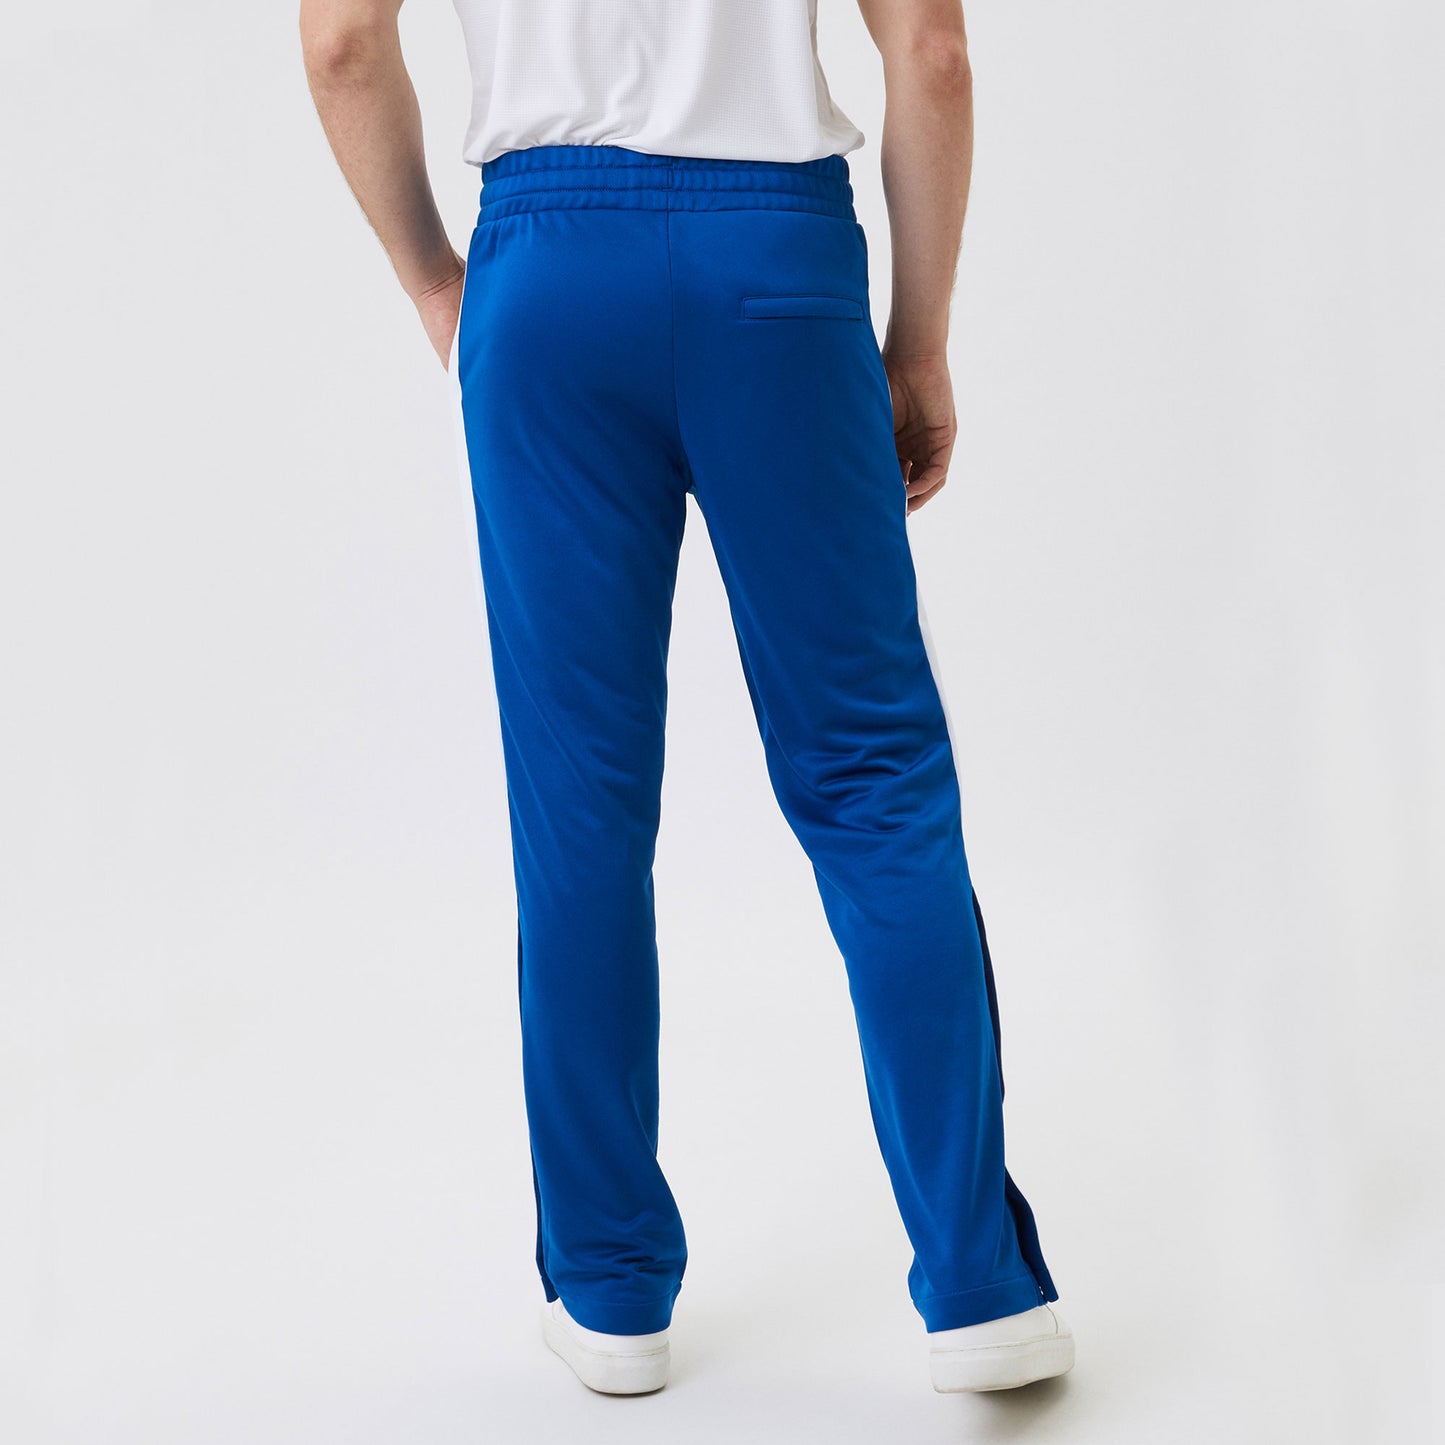 Björn Borg Ace Men's Tennis Pants Blue (2)